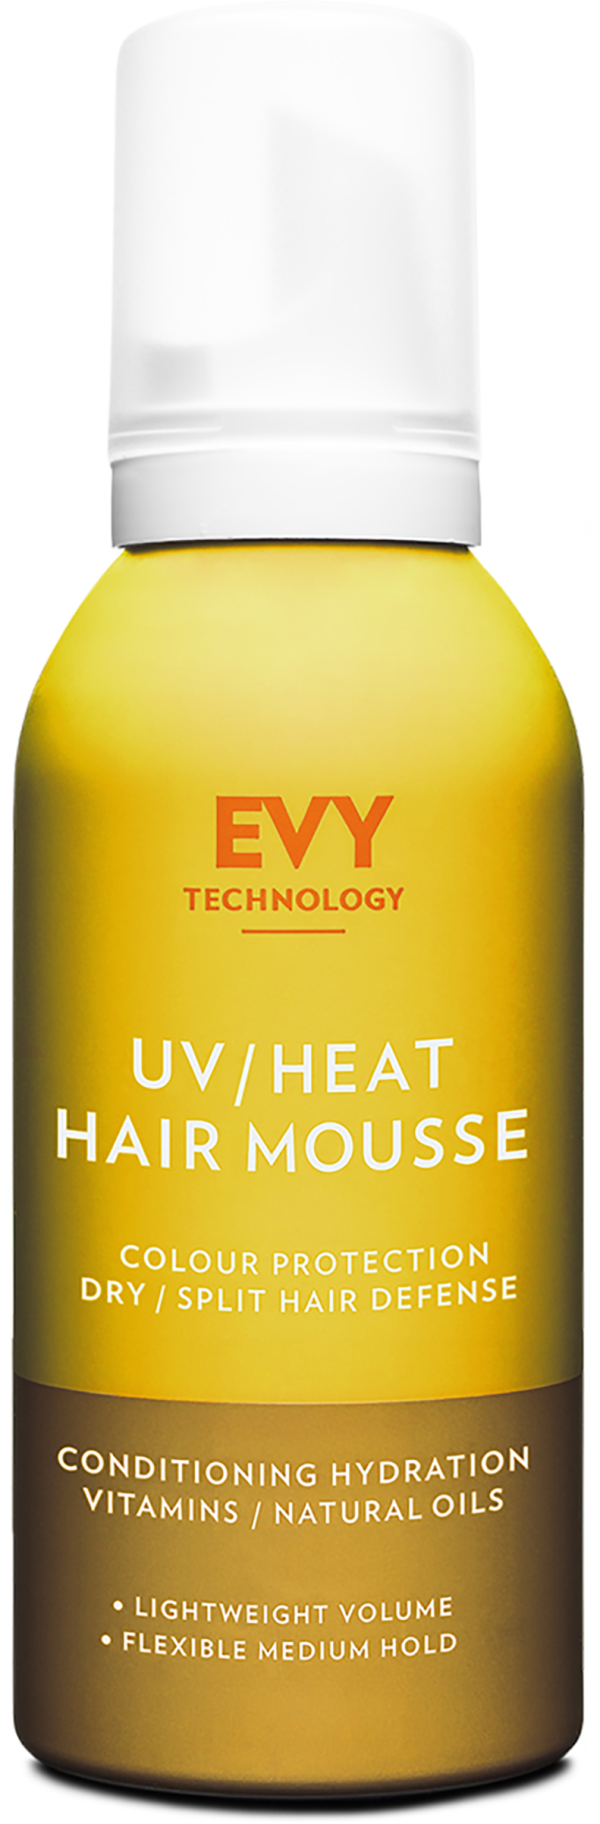 Evy UV/Heat hair mousse 75 ml